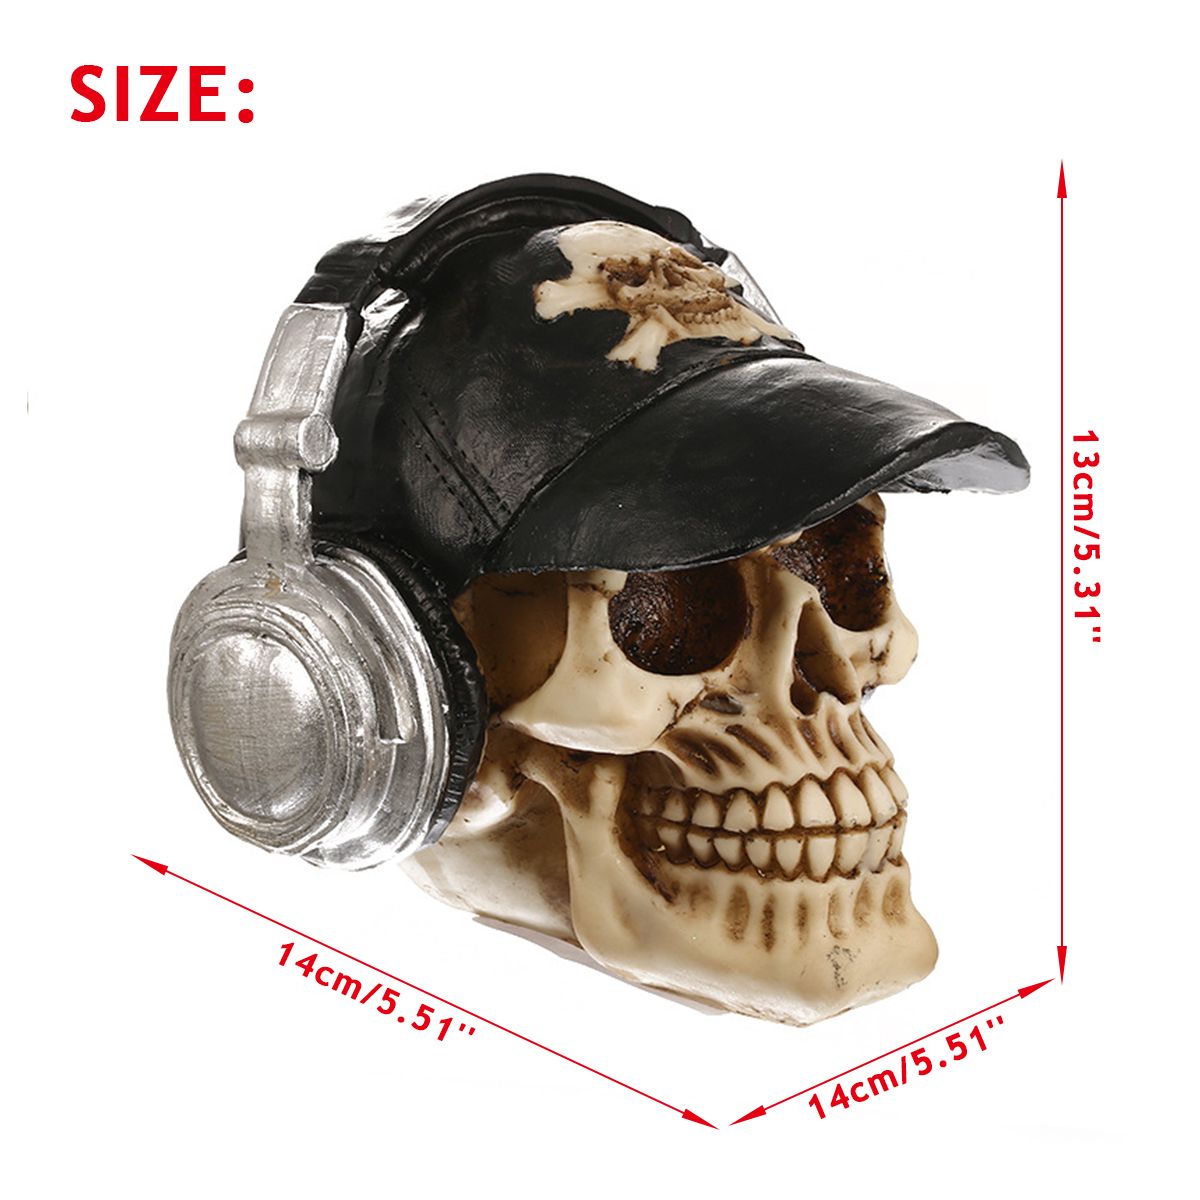 Resin-Craft-Statues-For-Decoration-Skull-Wthe-Headphone-Creative-Skull-Figurines-Sculpture-1369715